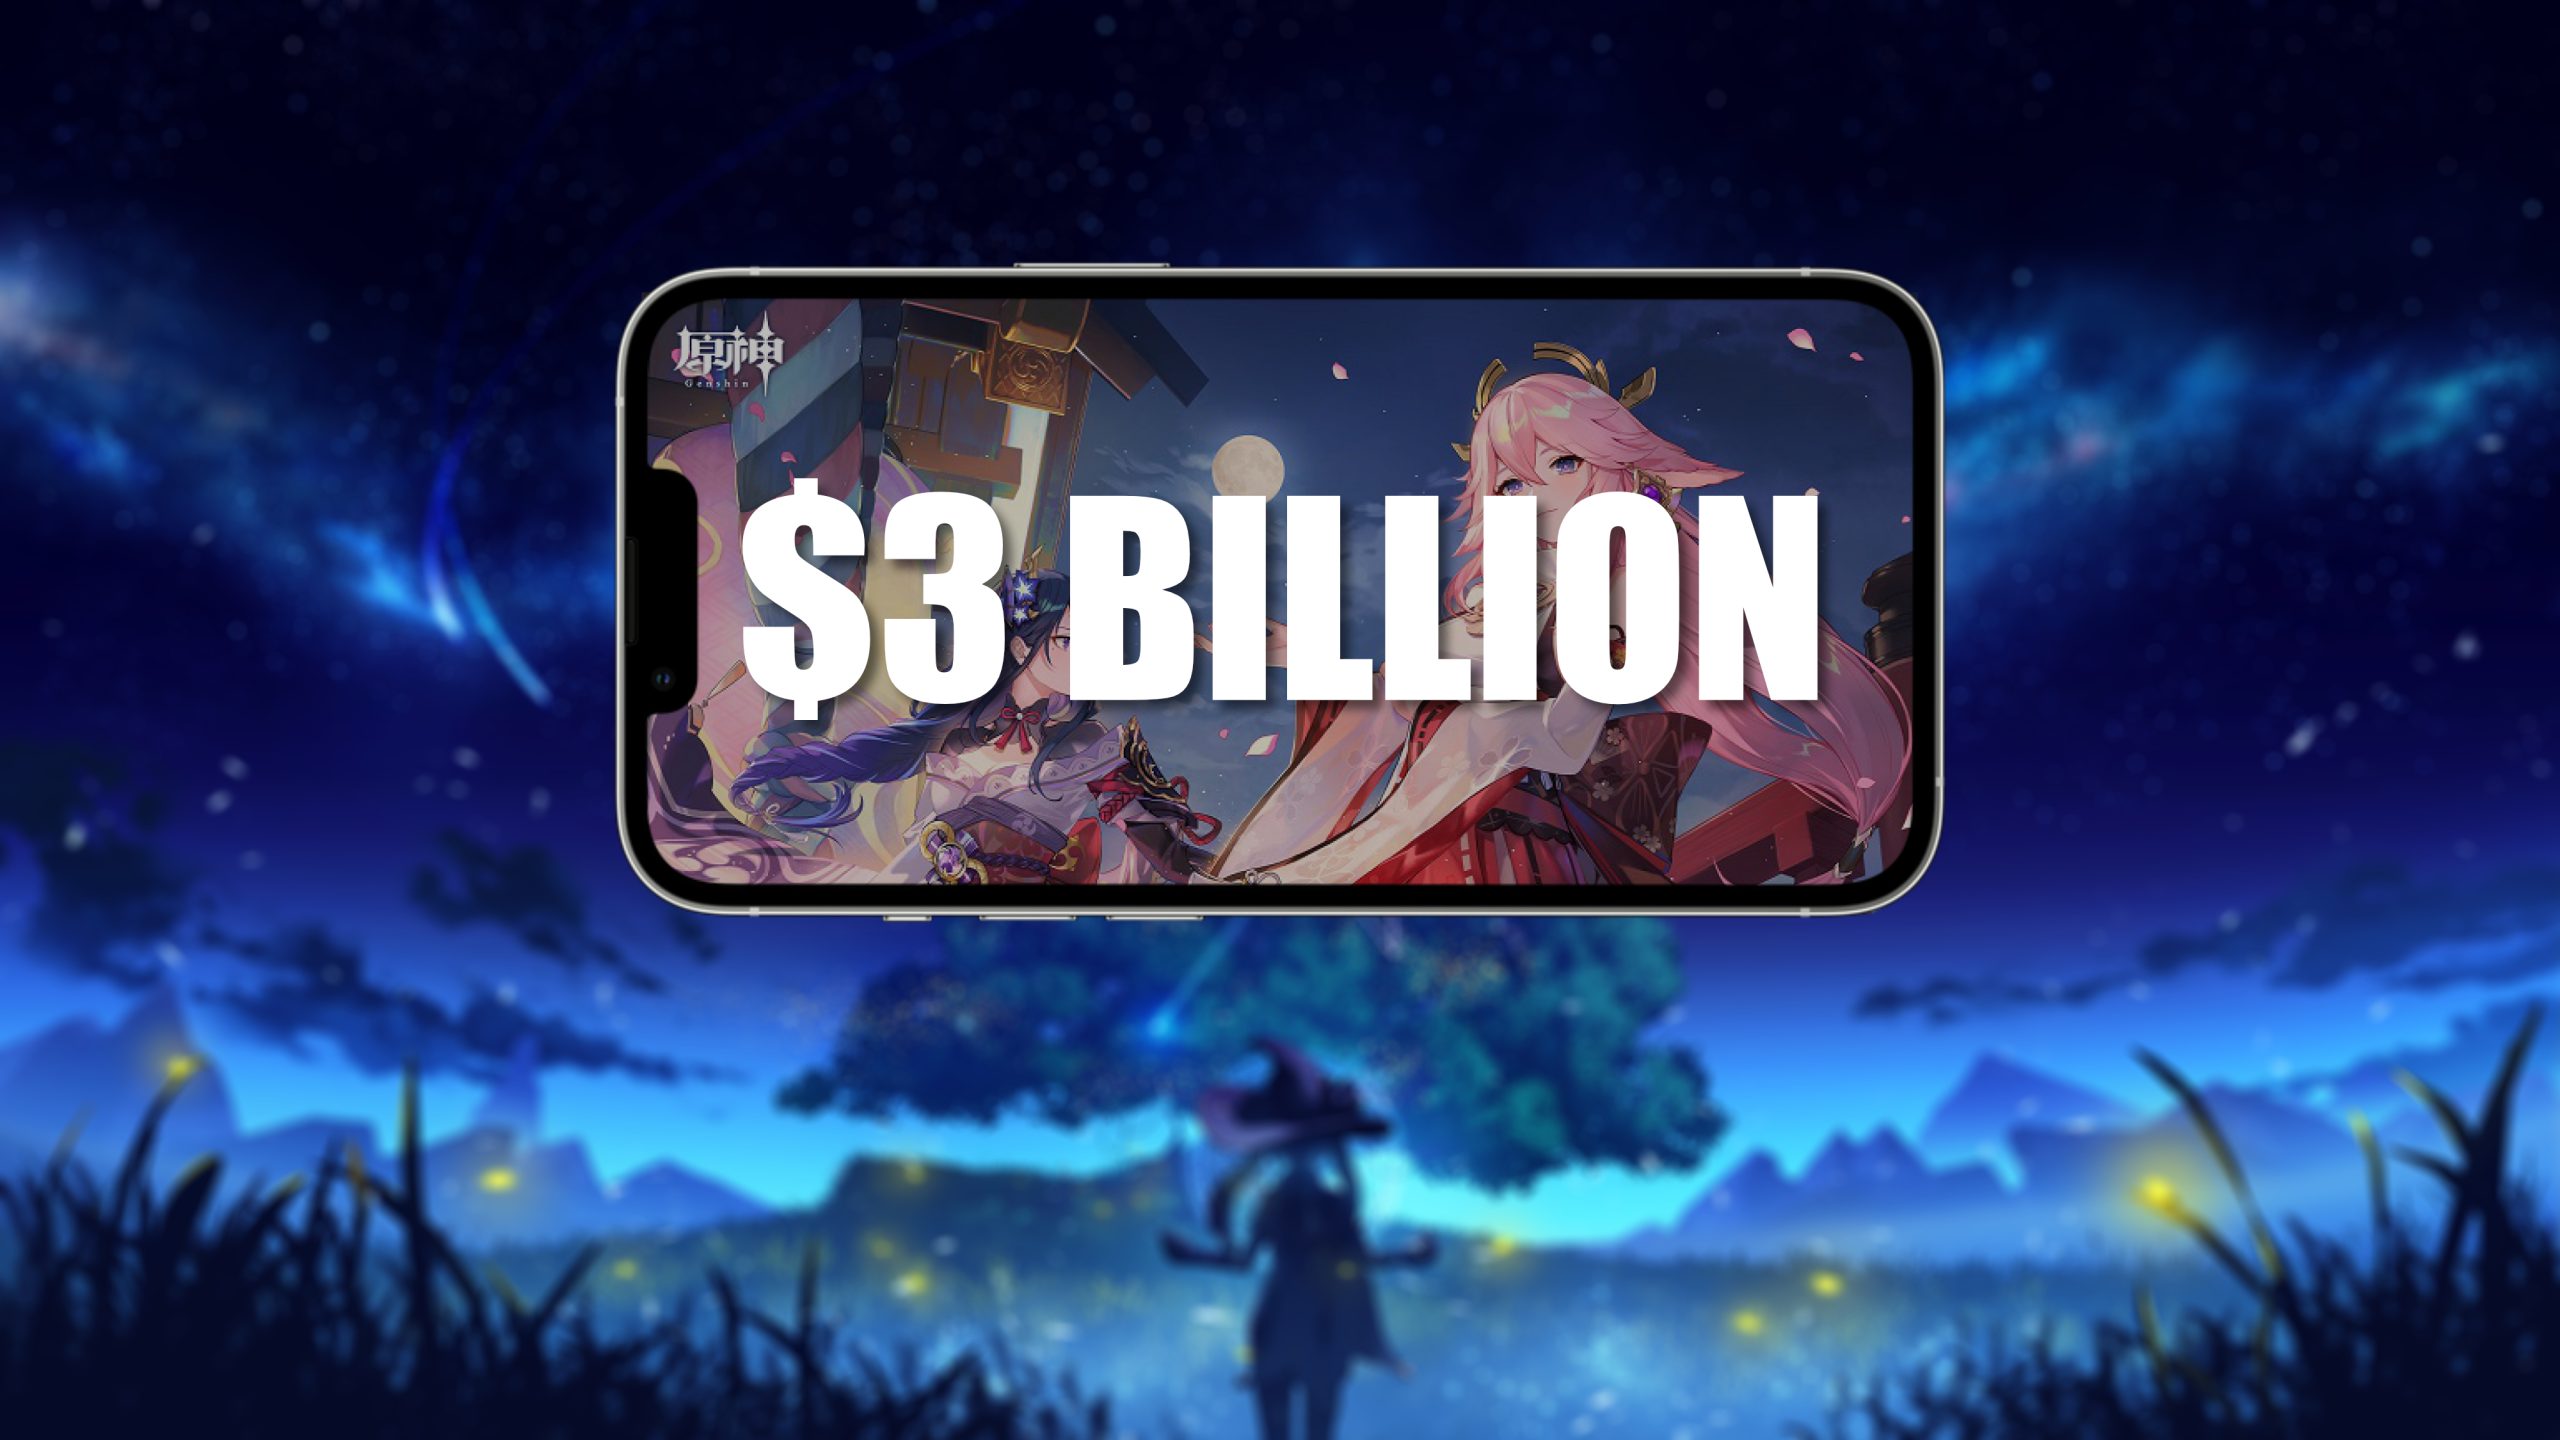 Over a billion